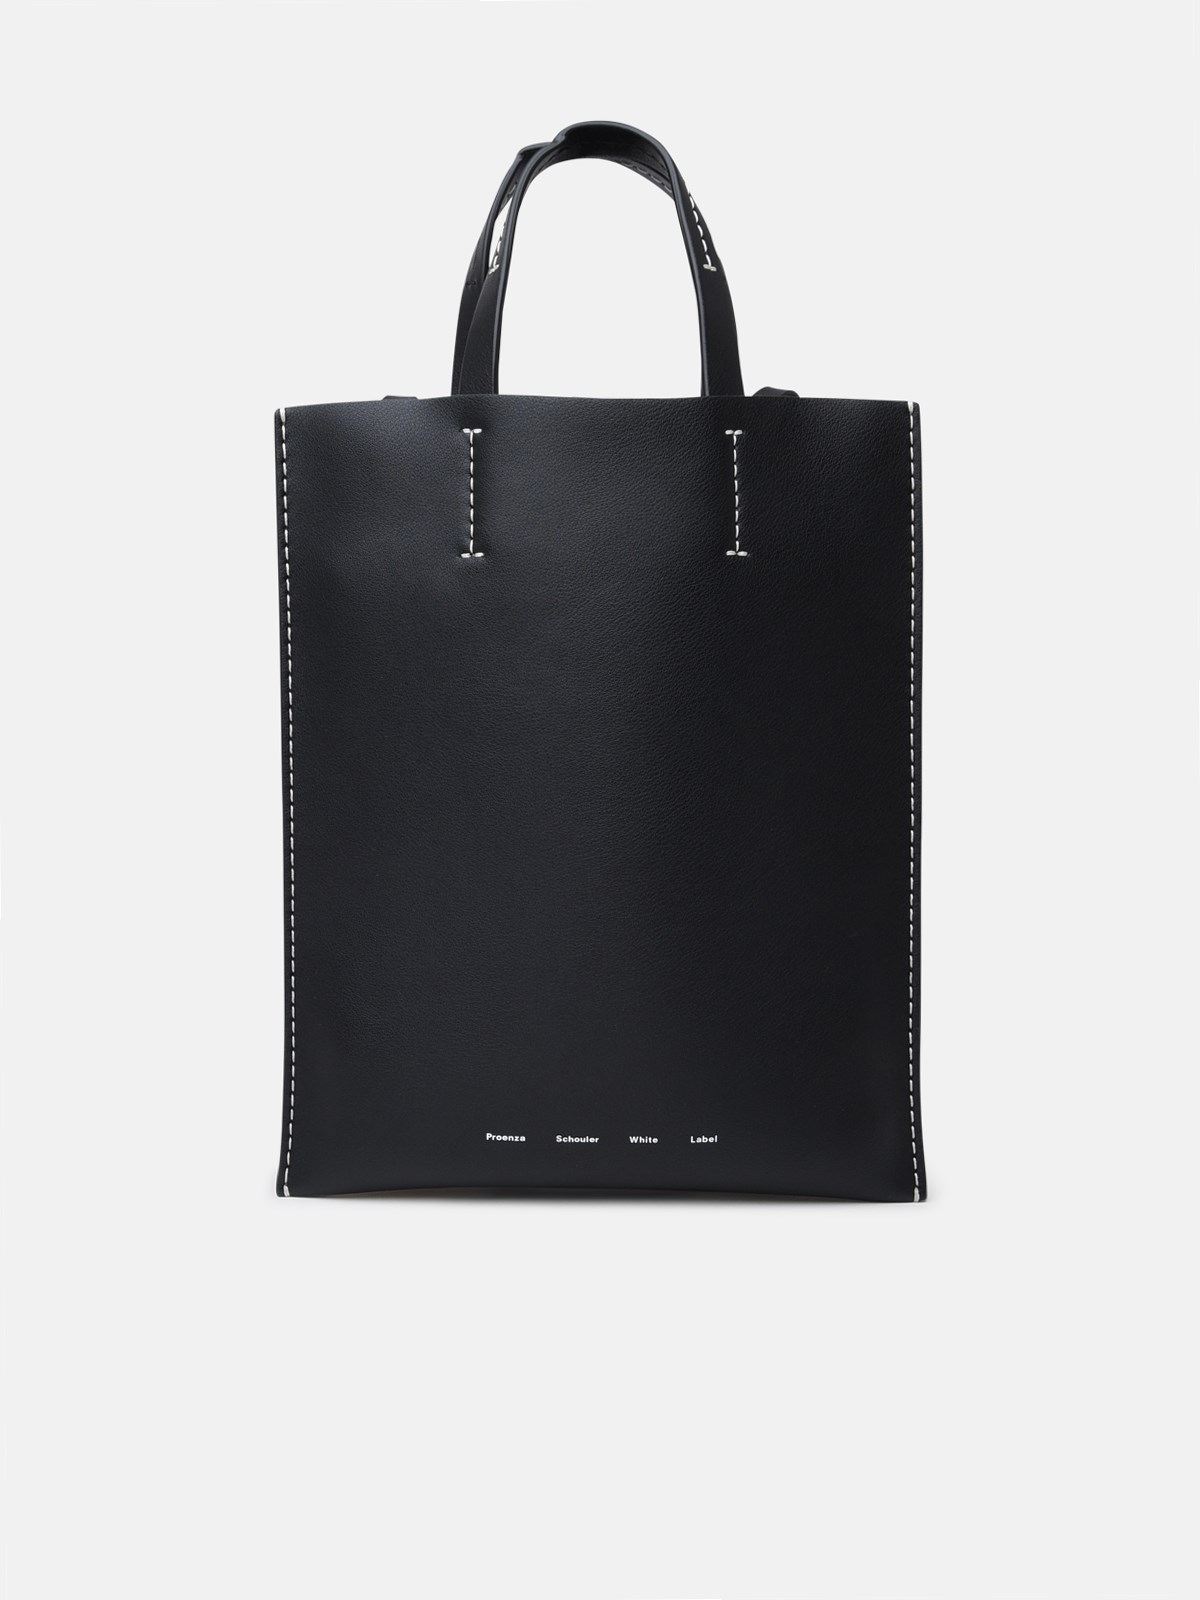 Proenza Schouler White Label Black Leather Twin Small Bag